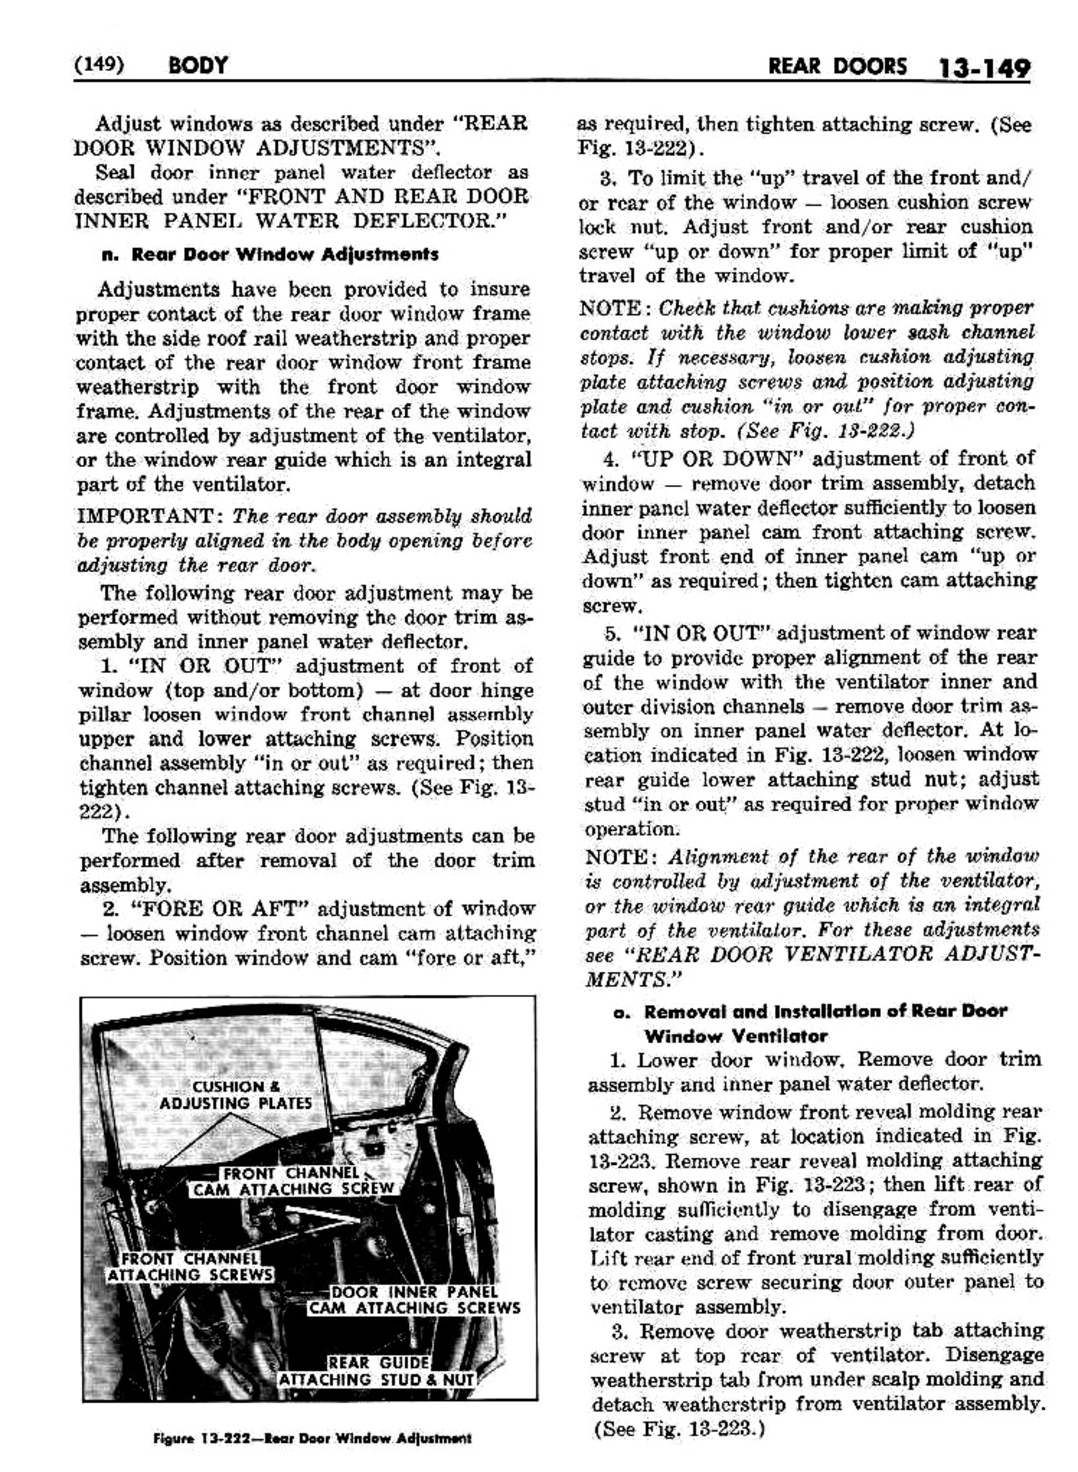 n_1958 Buick Body Service Manual-150-150.jpg